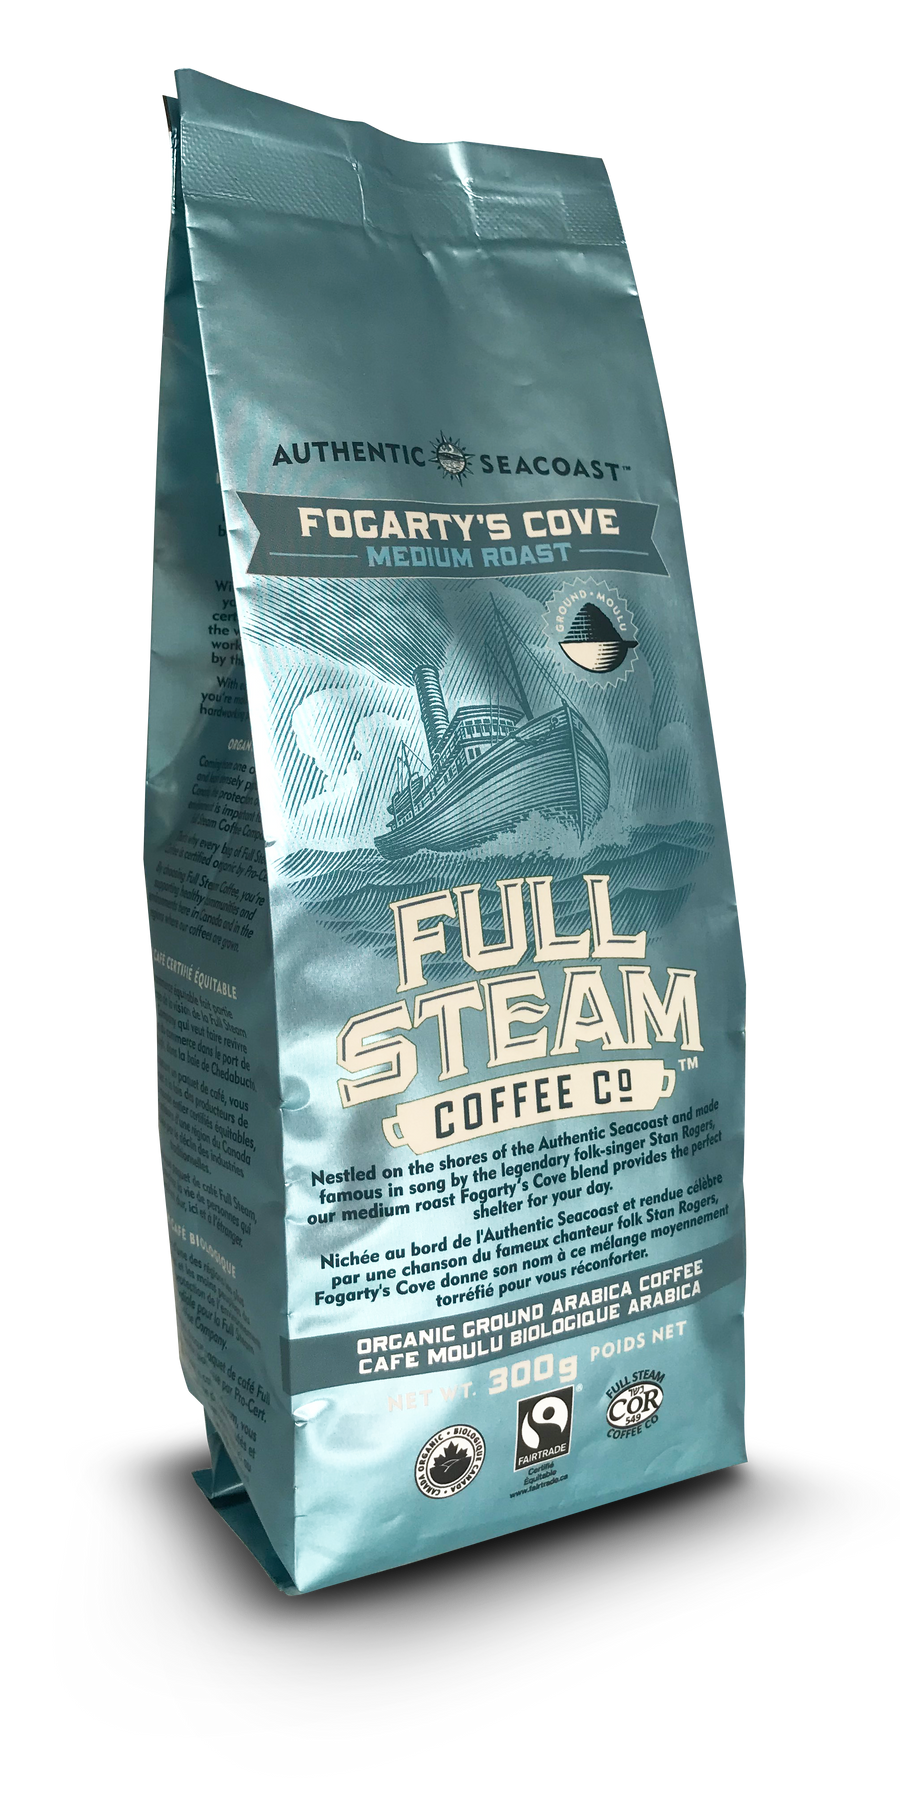 Full Steam Ground Coffee, Fogarty's Cove Medium Roast